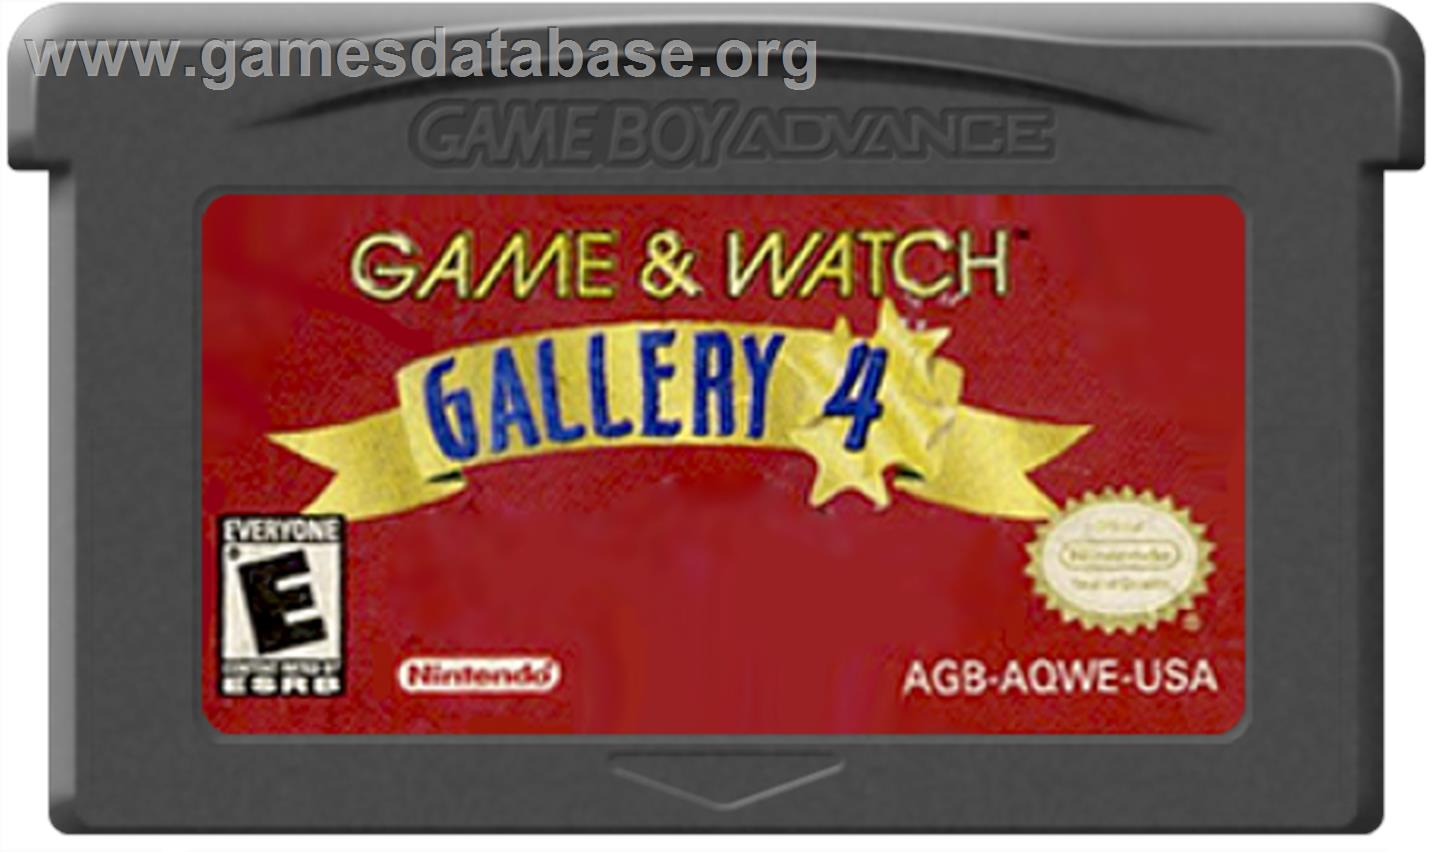 Game & Watch Gallery 4 - Nintendo Game Boy Advance - Artwork - Cartridge